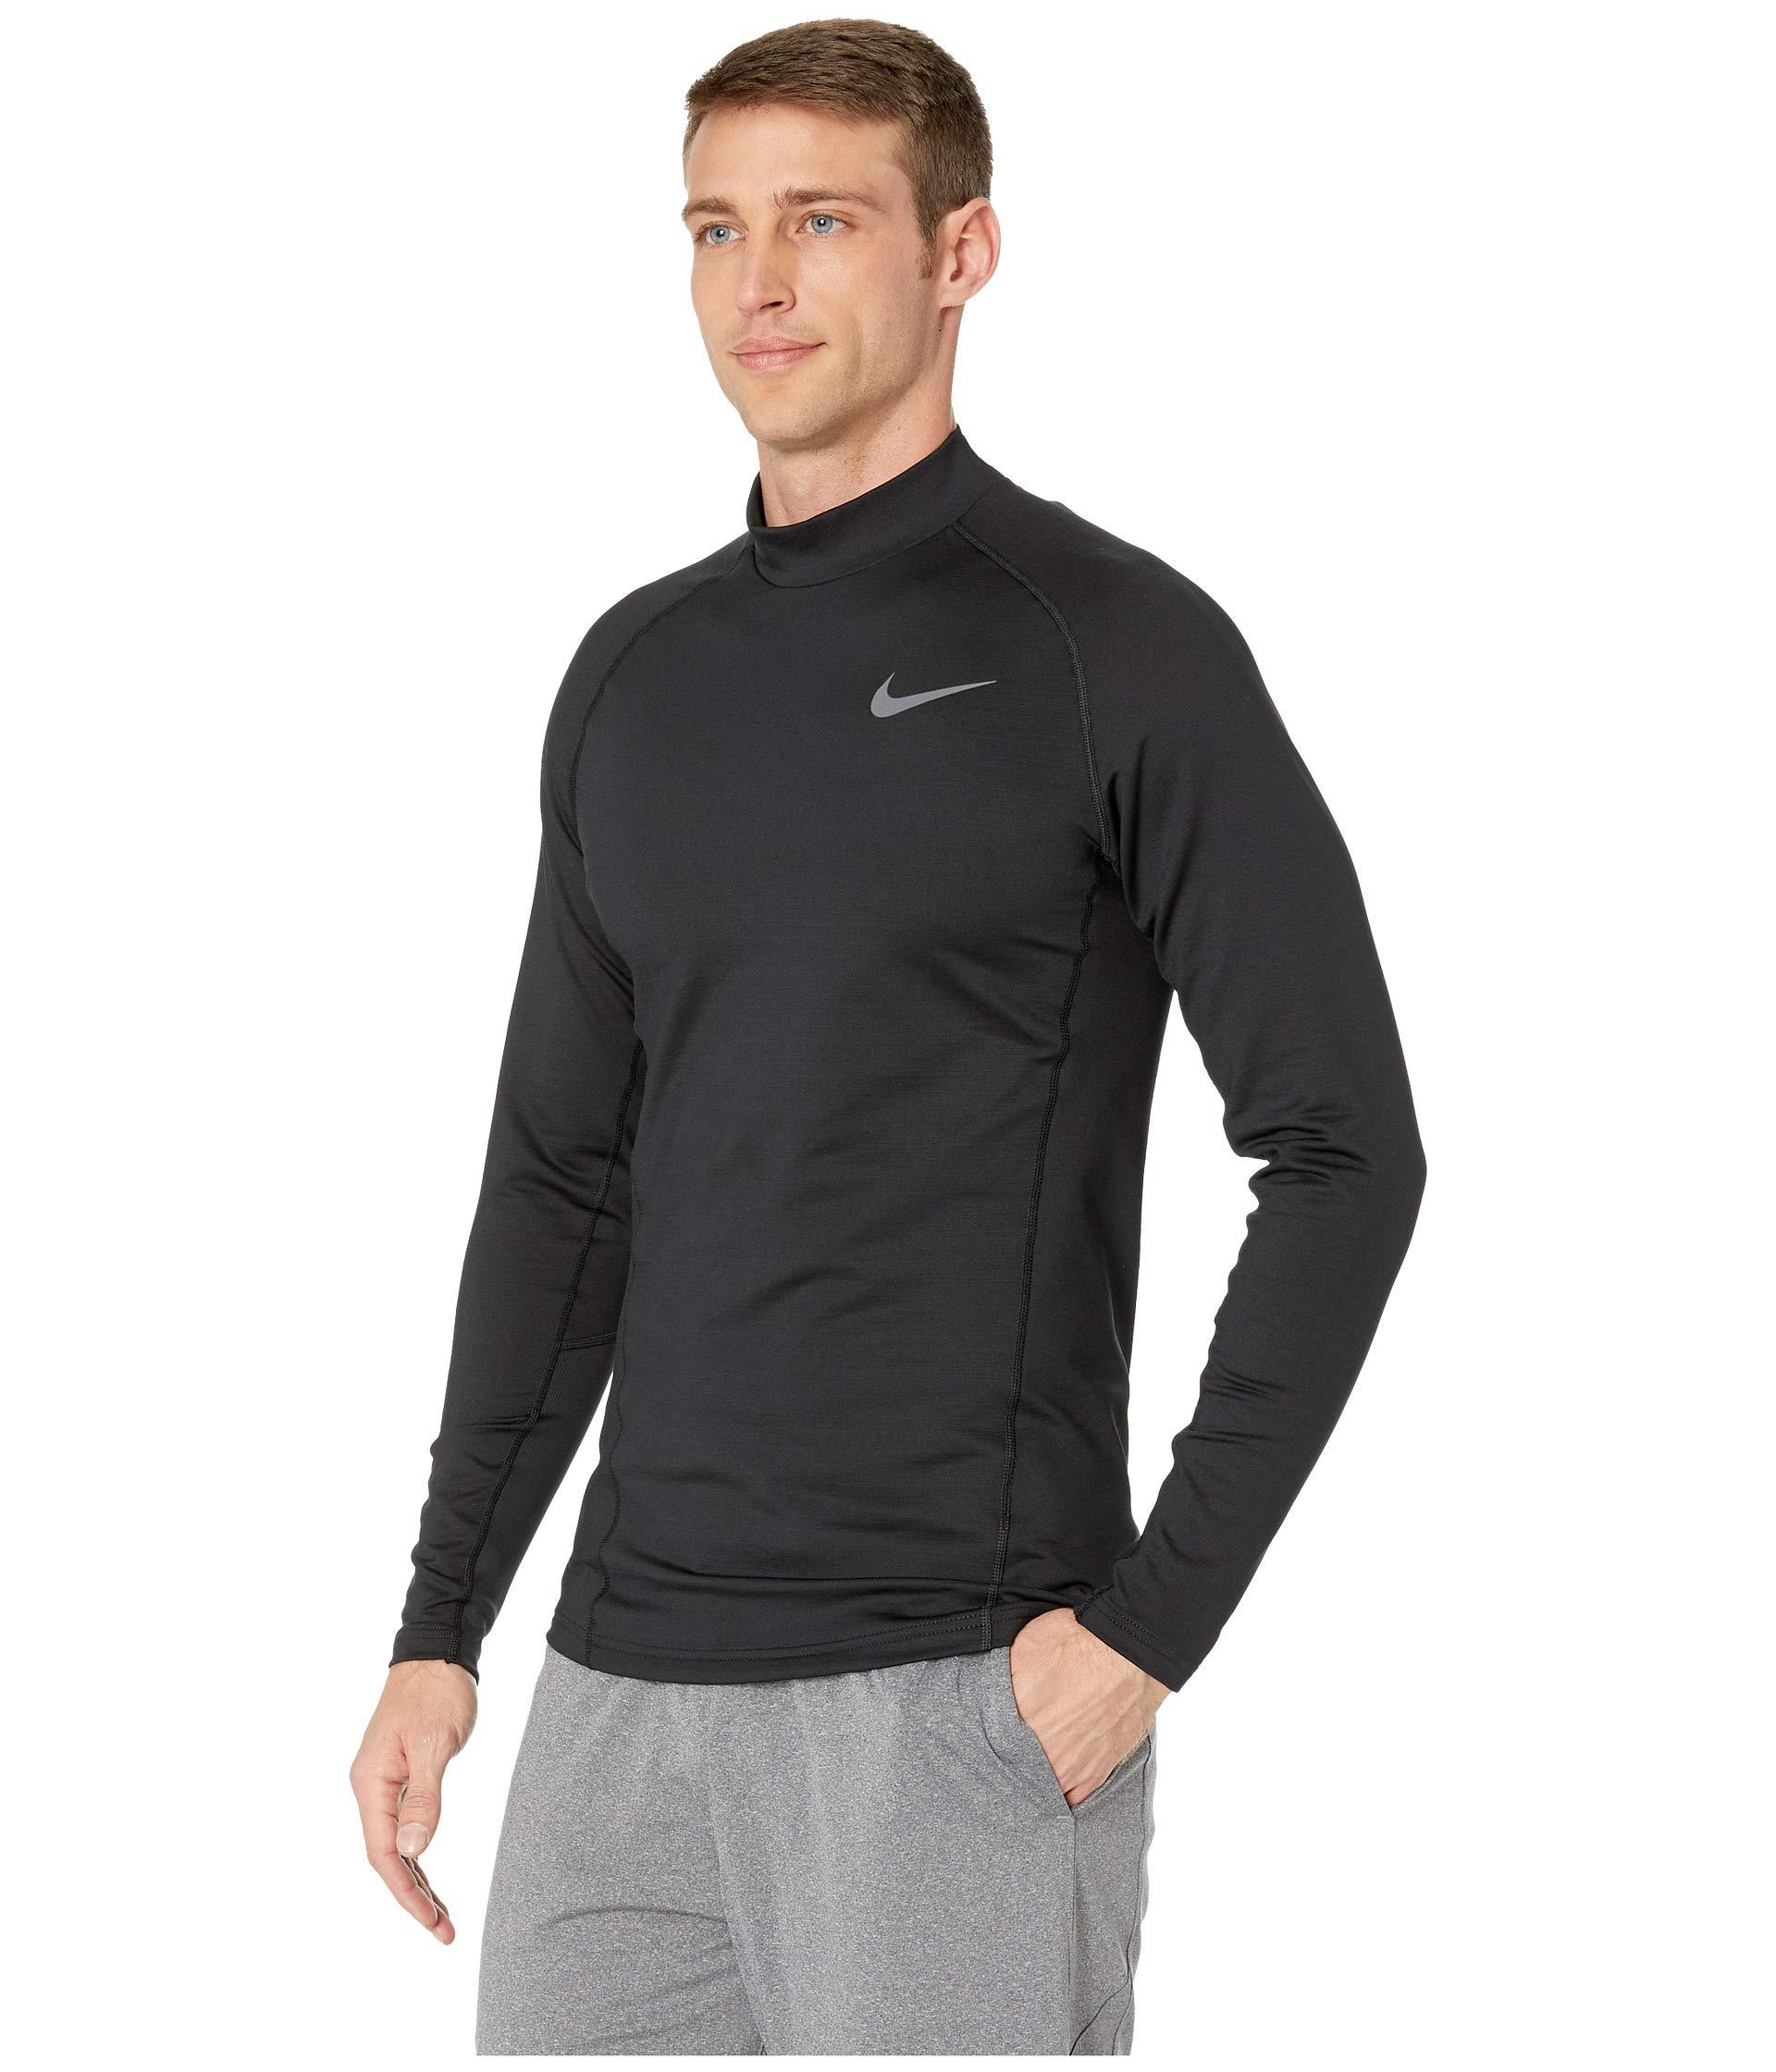 Nike Synthetic Pro Therma Top Long Sleeve Mock in Black/Black/Dark Grey  (Black) for Men - Lyst